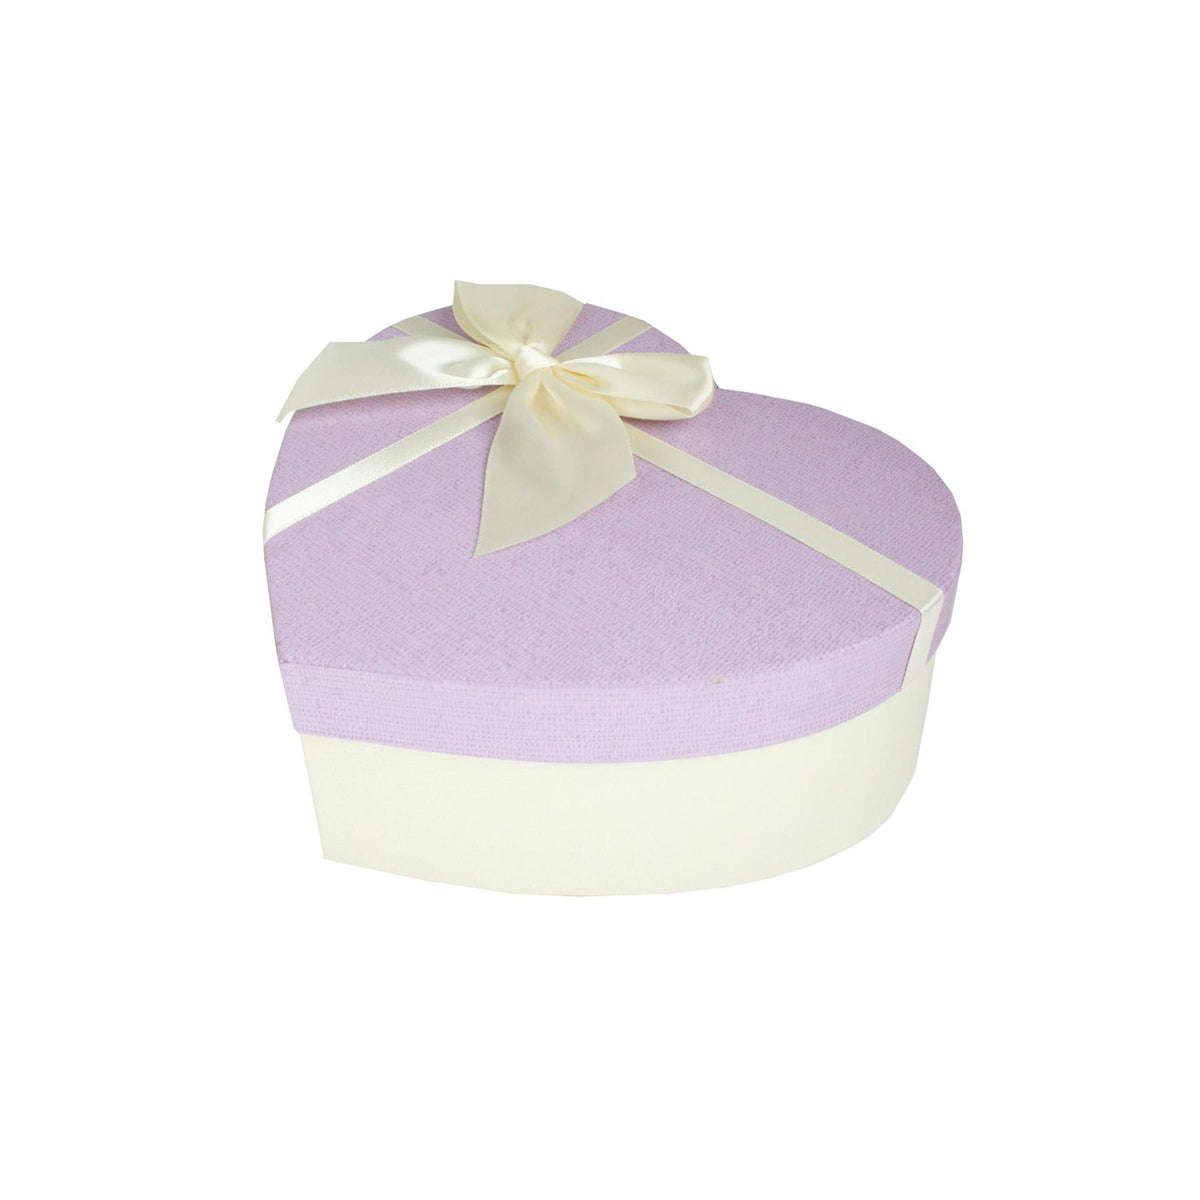 Luxury Heart Shaped White/Lilac Gift Box - Single (Sizes Available)